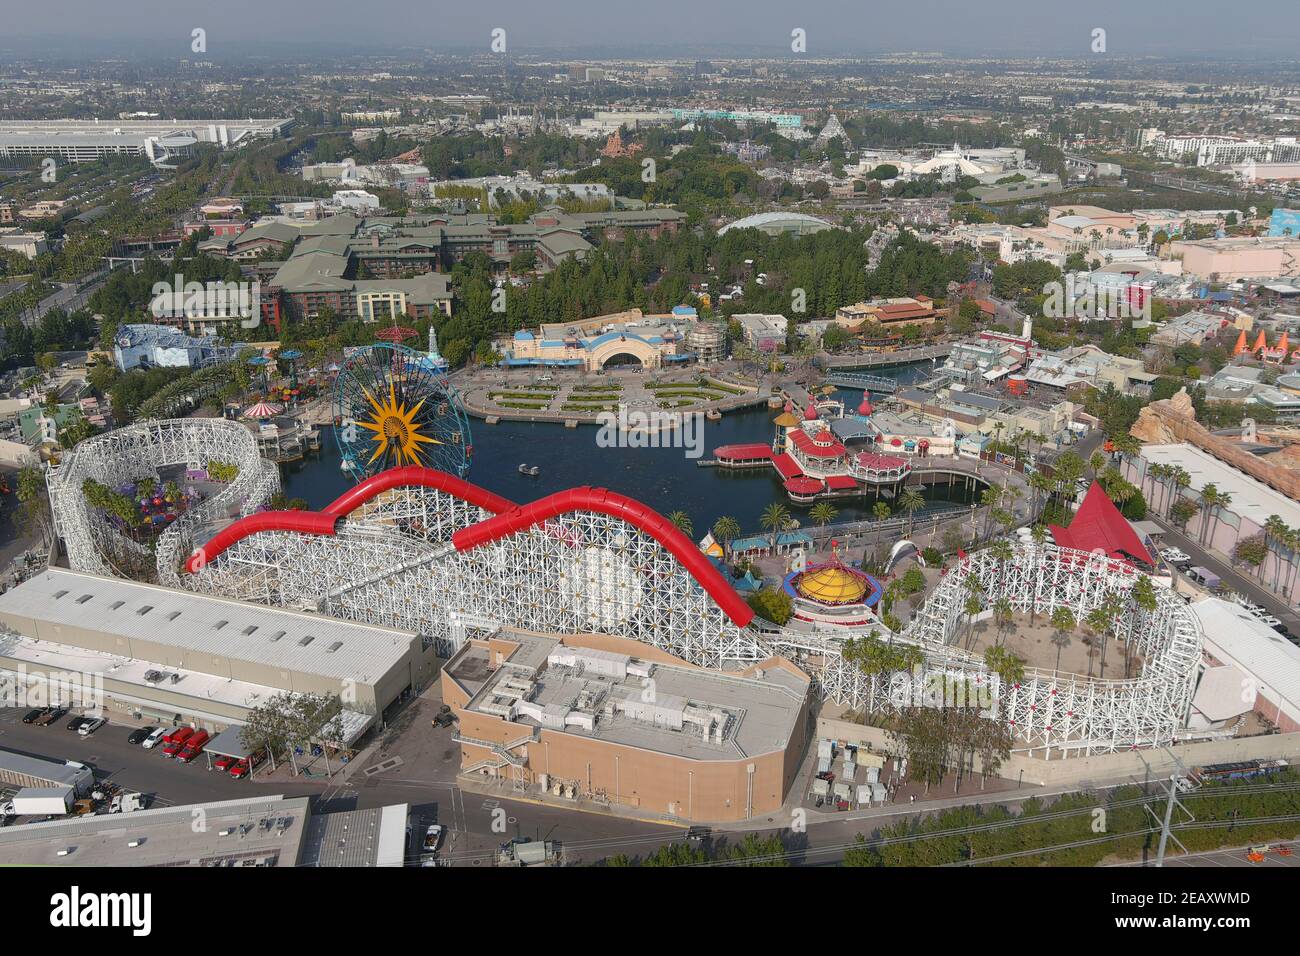 An aerial view of Disney California Adventure and Disneyland Park, Wednesday, Feb. 10, 2021, in Anaheim, Calif. Stock Photo